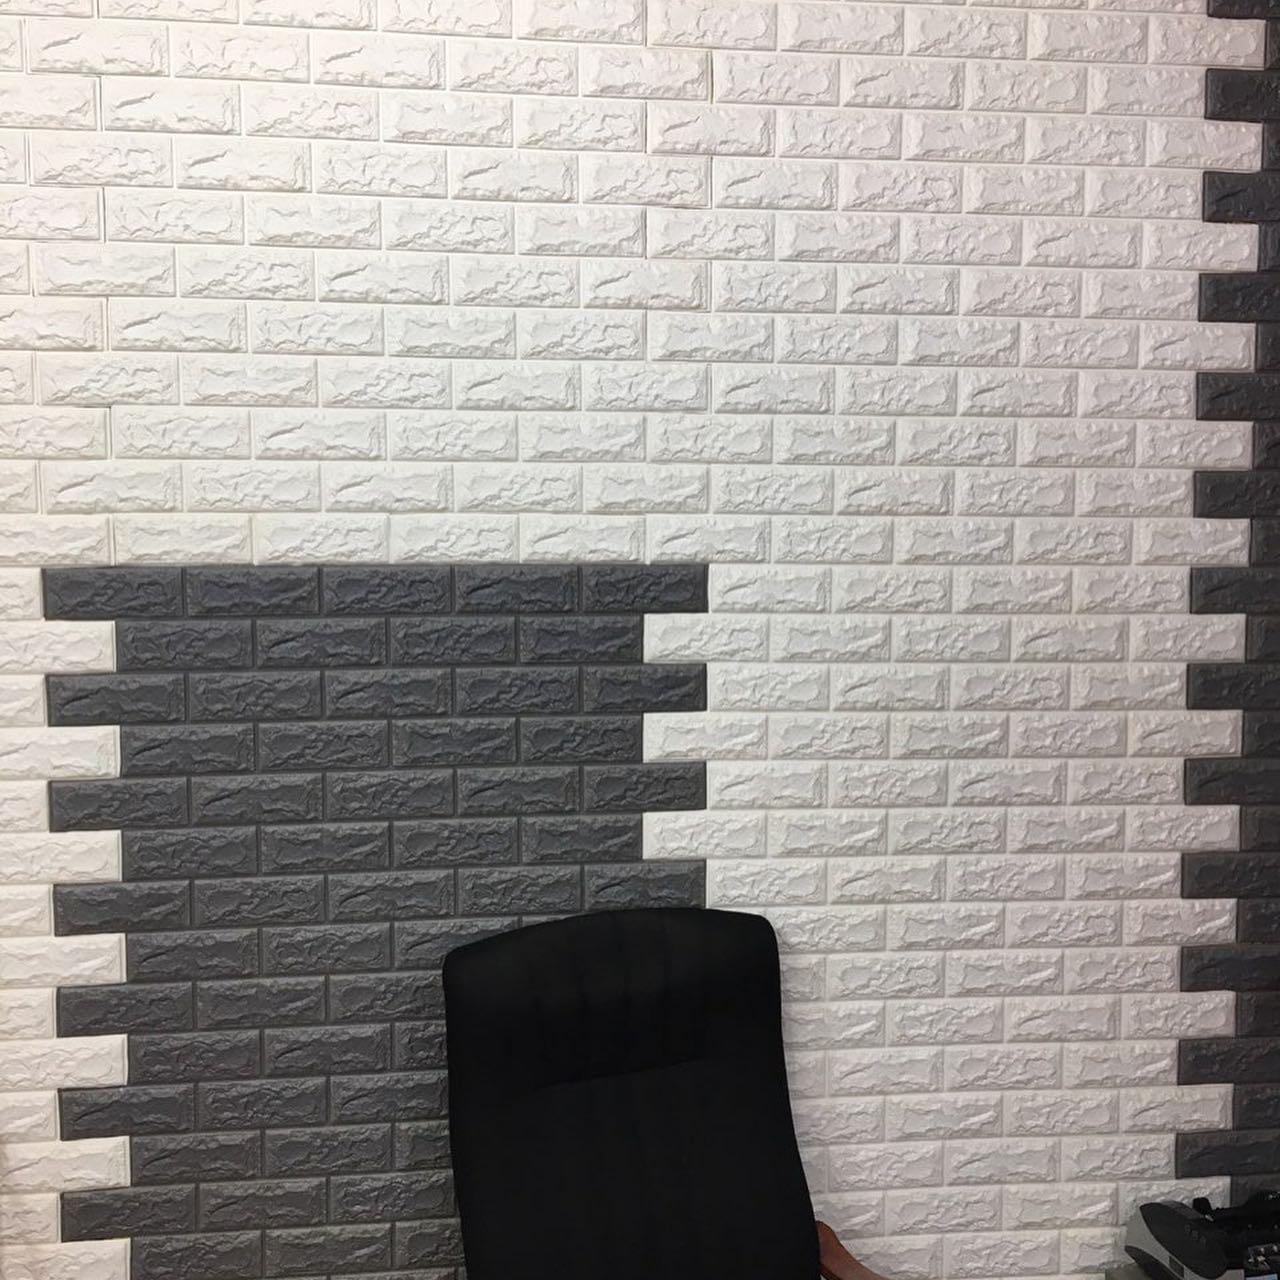 3D Foam bricks wall design